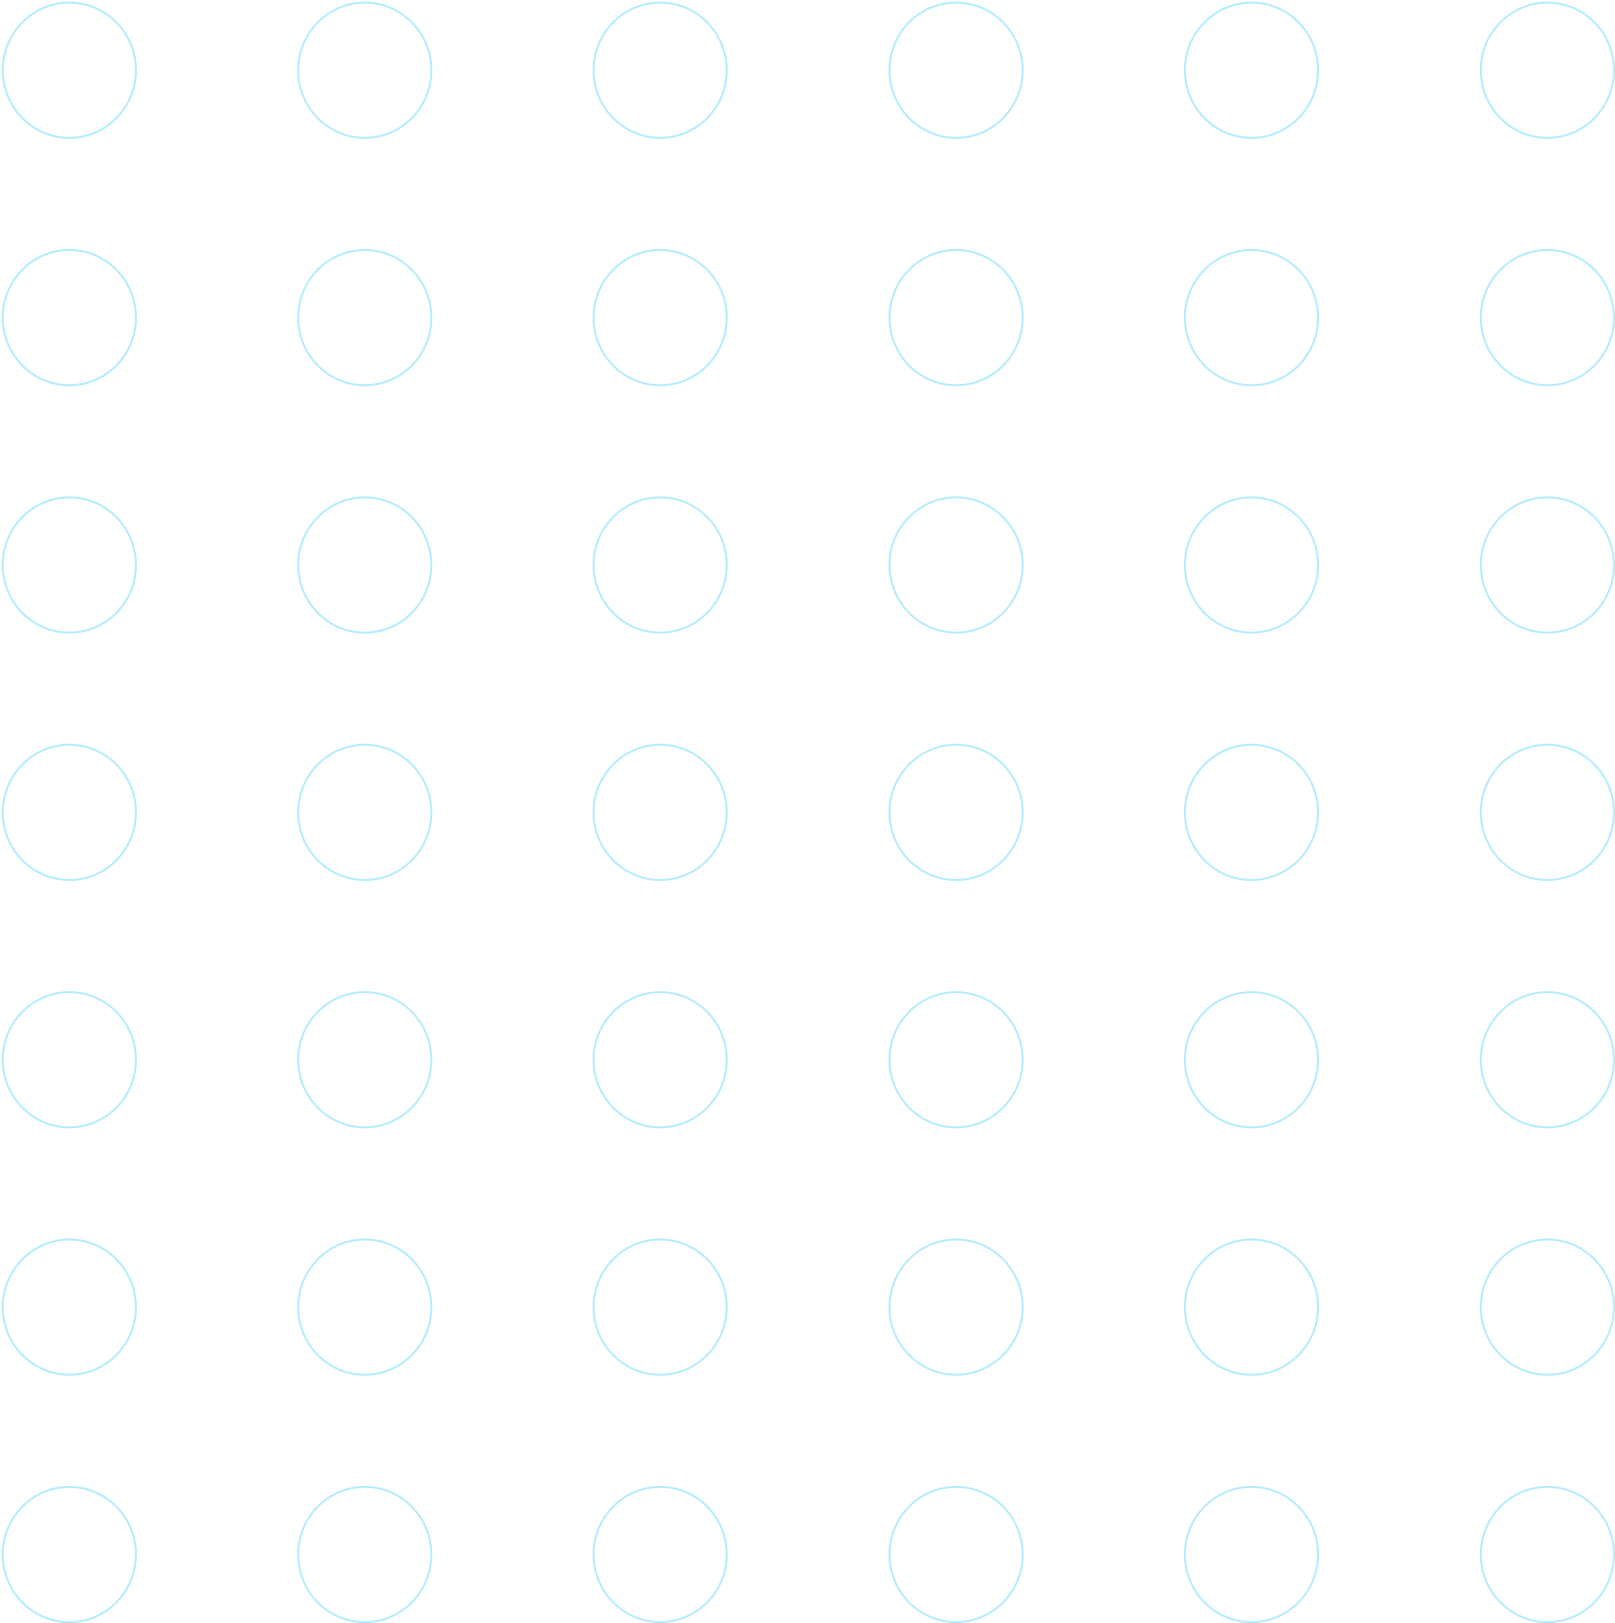 Circle grid Image